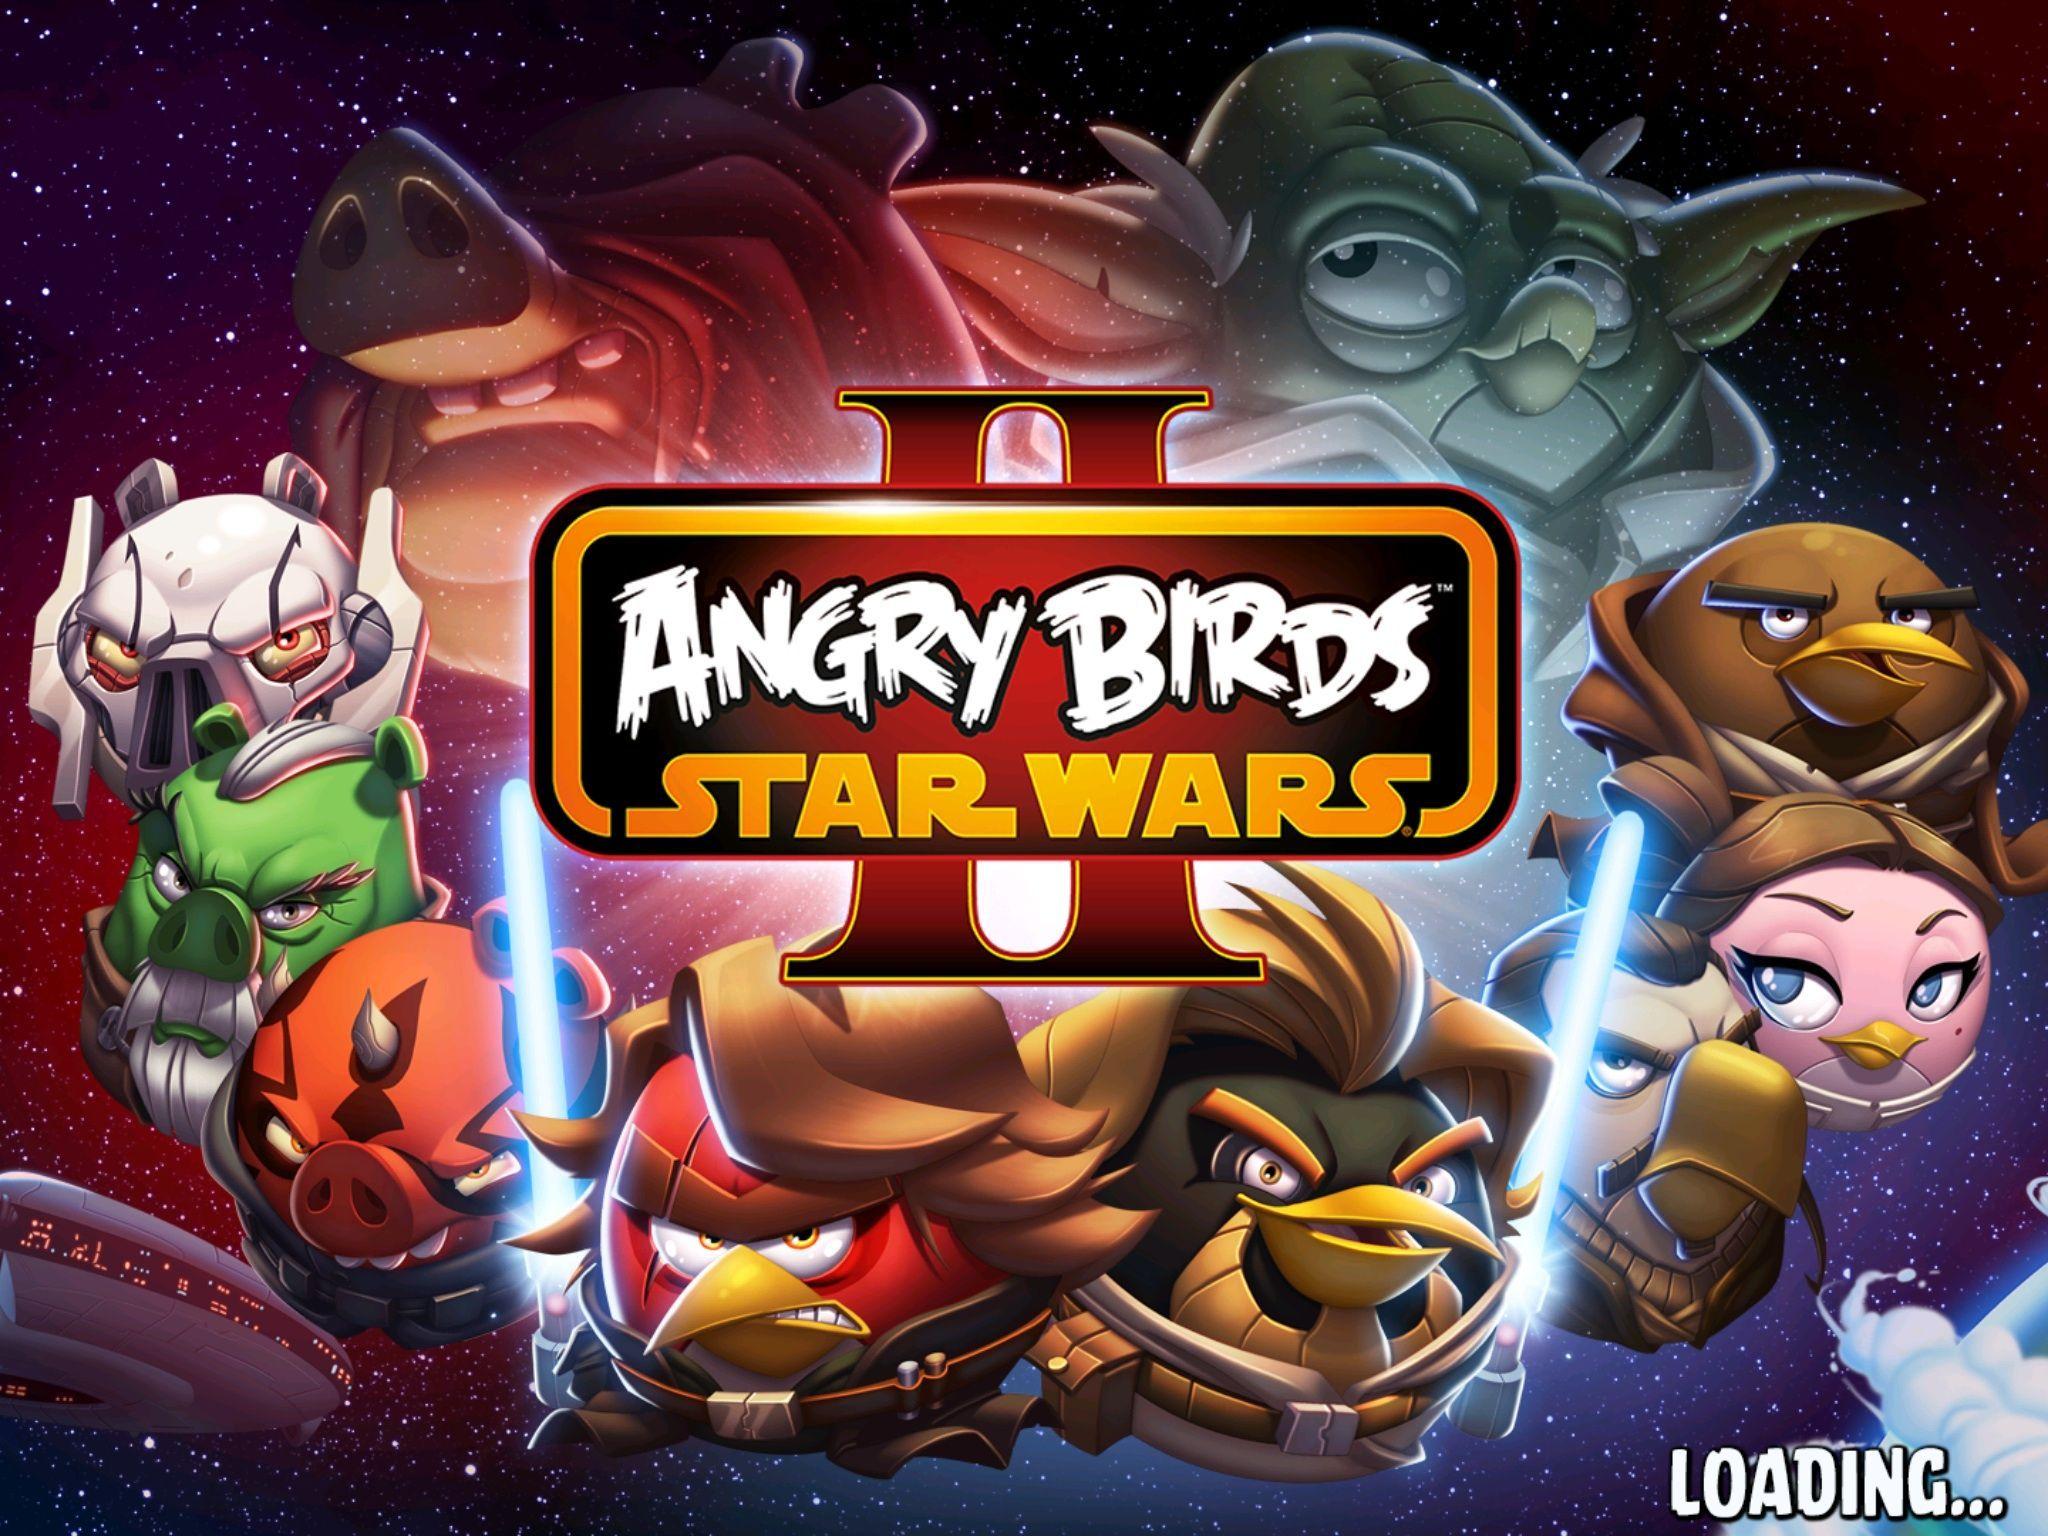 Angry Birds Loading Logo - angry birds star wars II loading screen | Angry birds | Pinterest ...